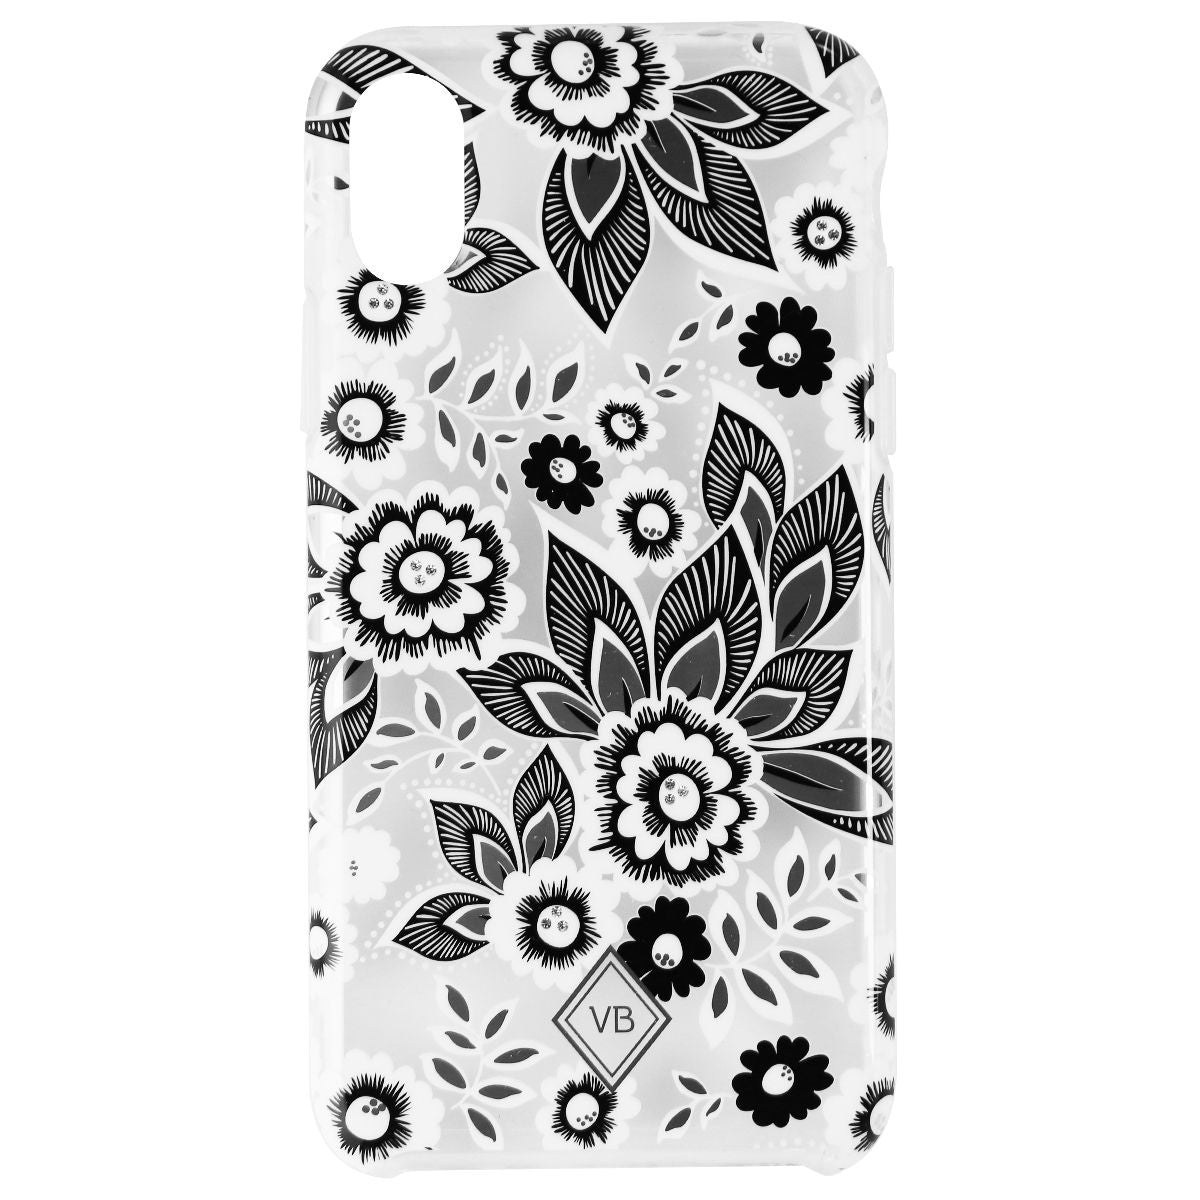 Vera Bradley Flexible Frame Case Apple iPhone X - White / Black Lotus Flowers Cell Phone - Cases, Covers & Skins Vera Bradley    - Simple Cell Bulk Wholesale Pricing - USA Seller